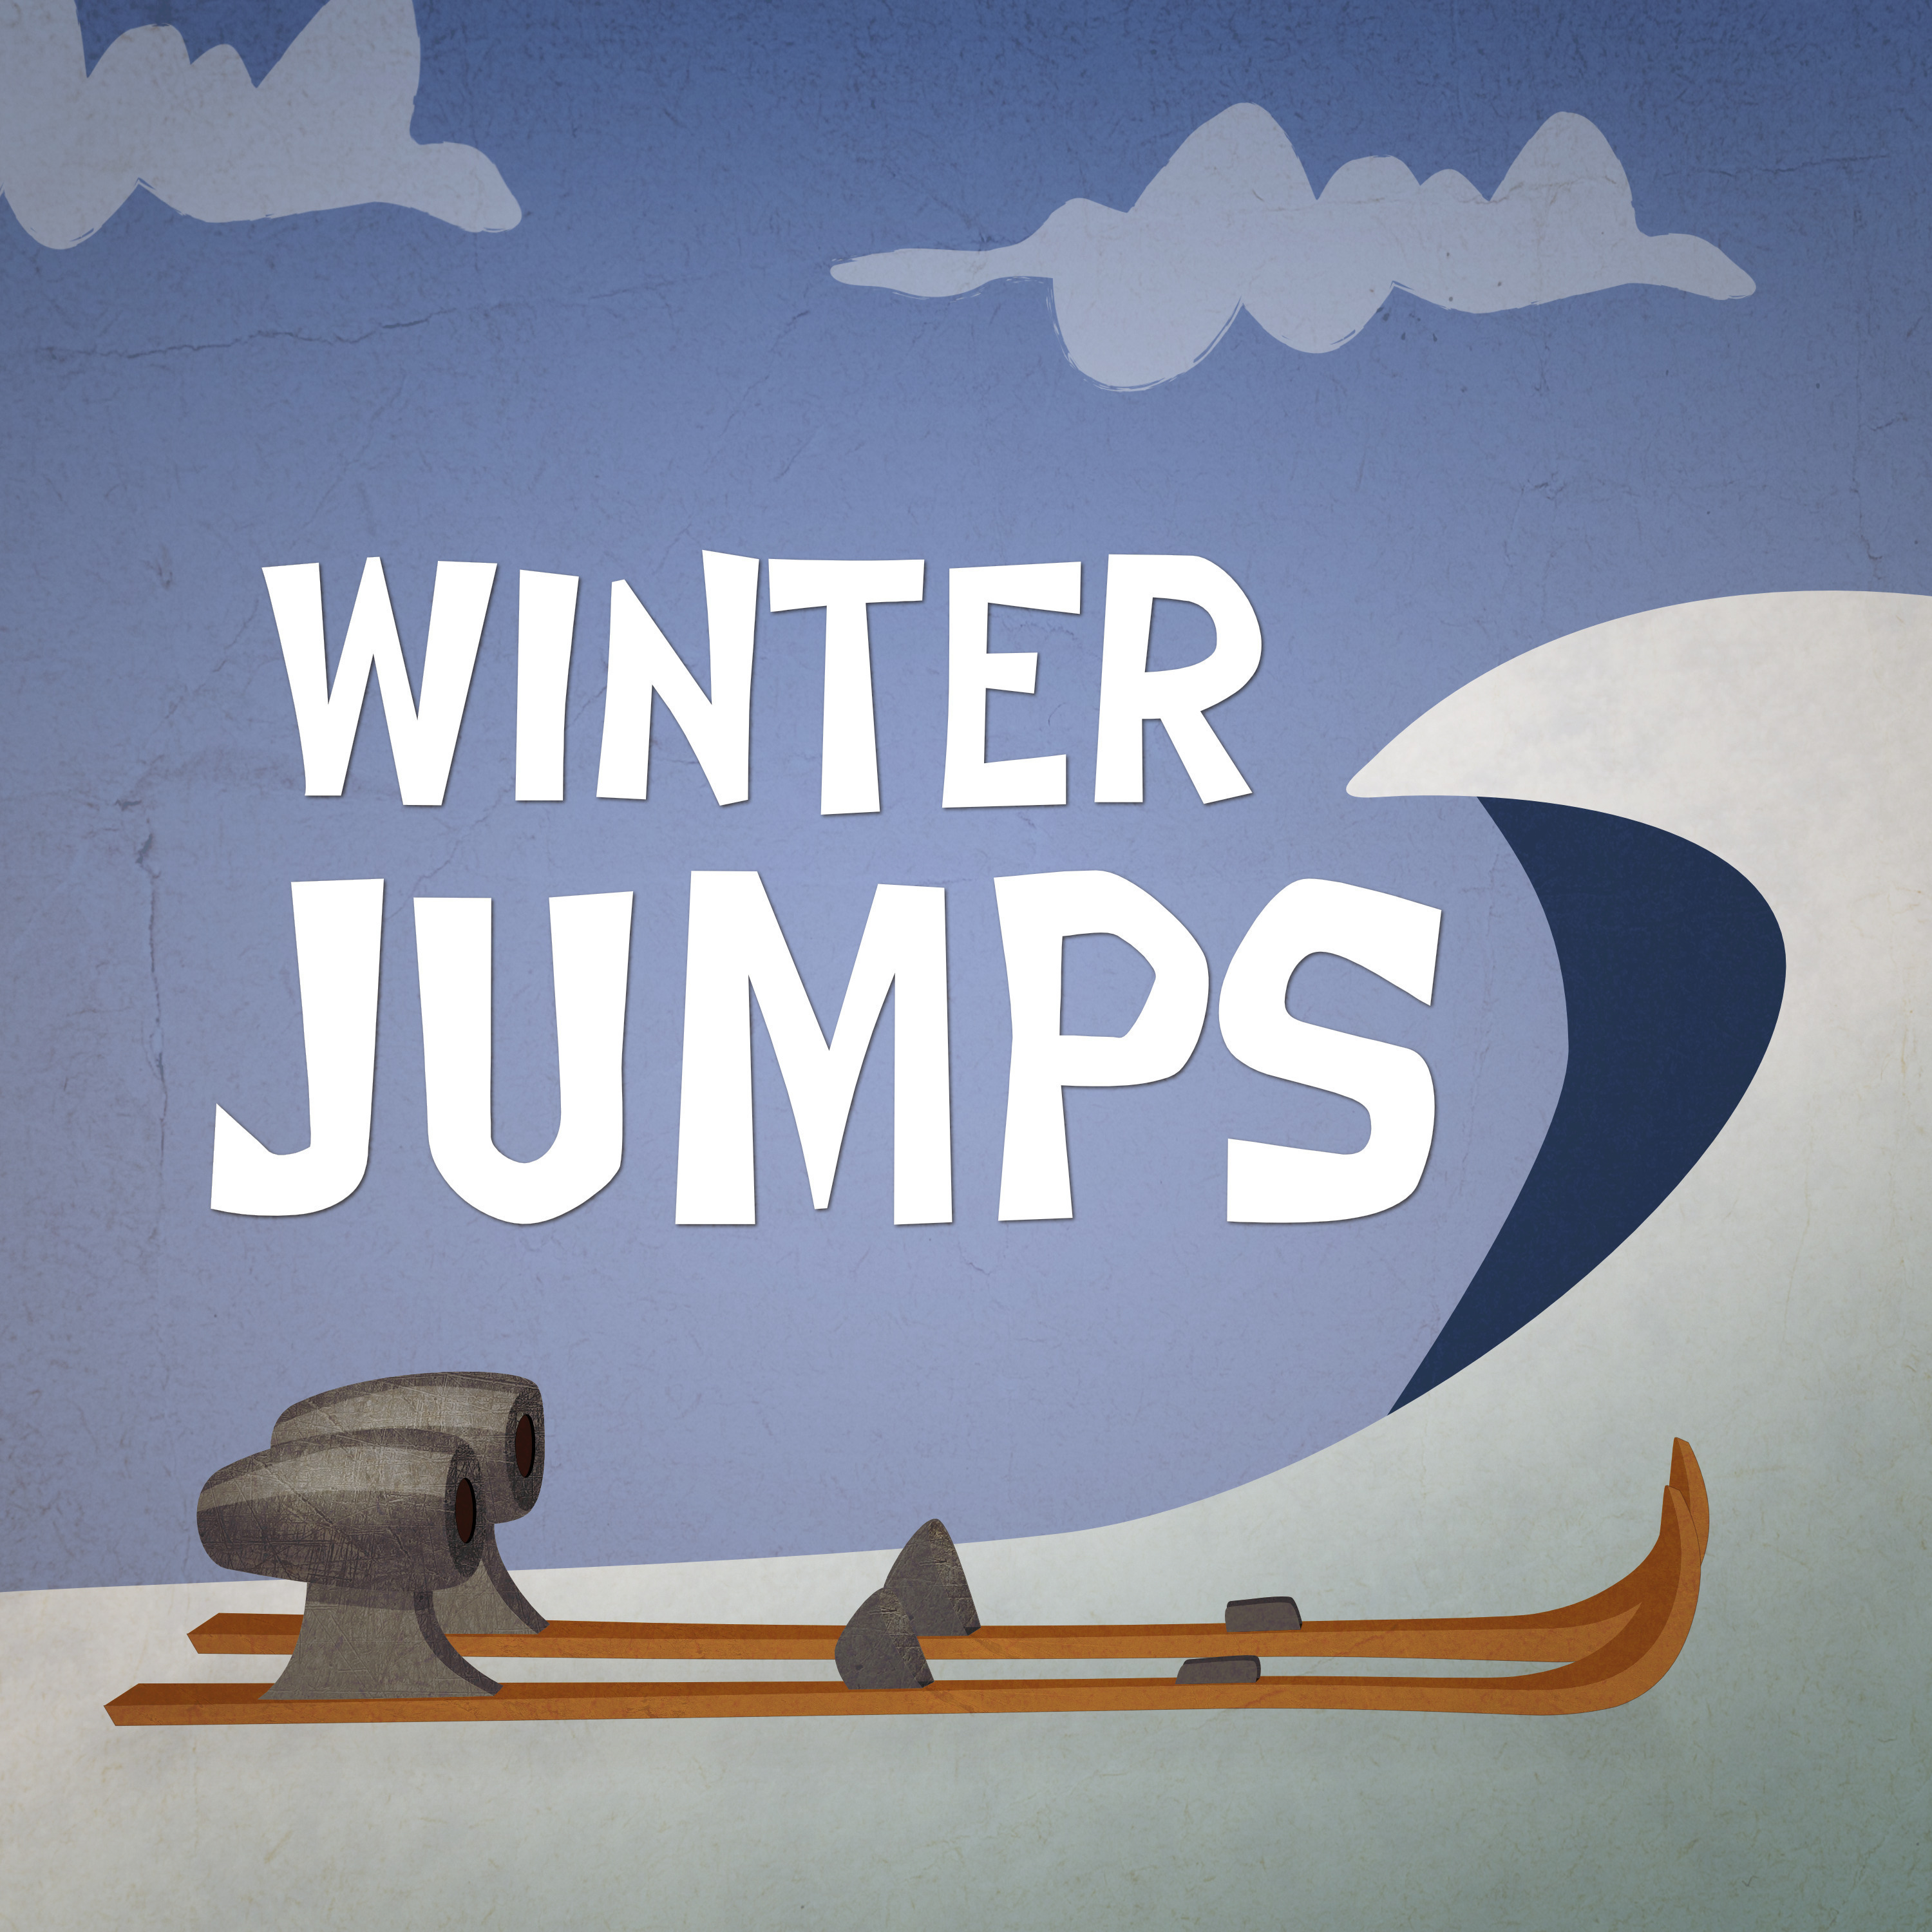 42. Winter jumps